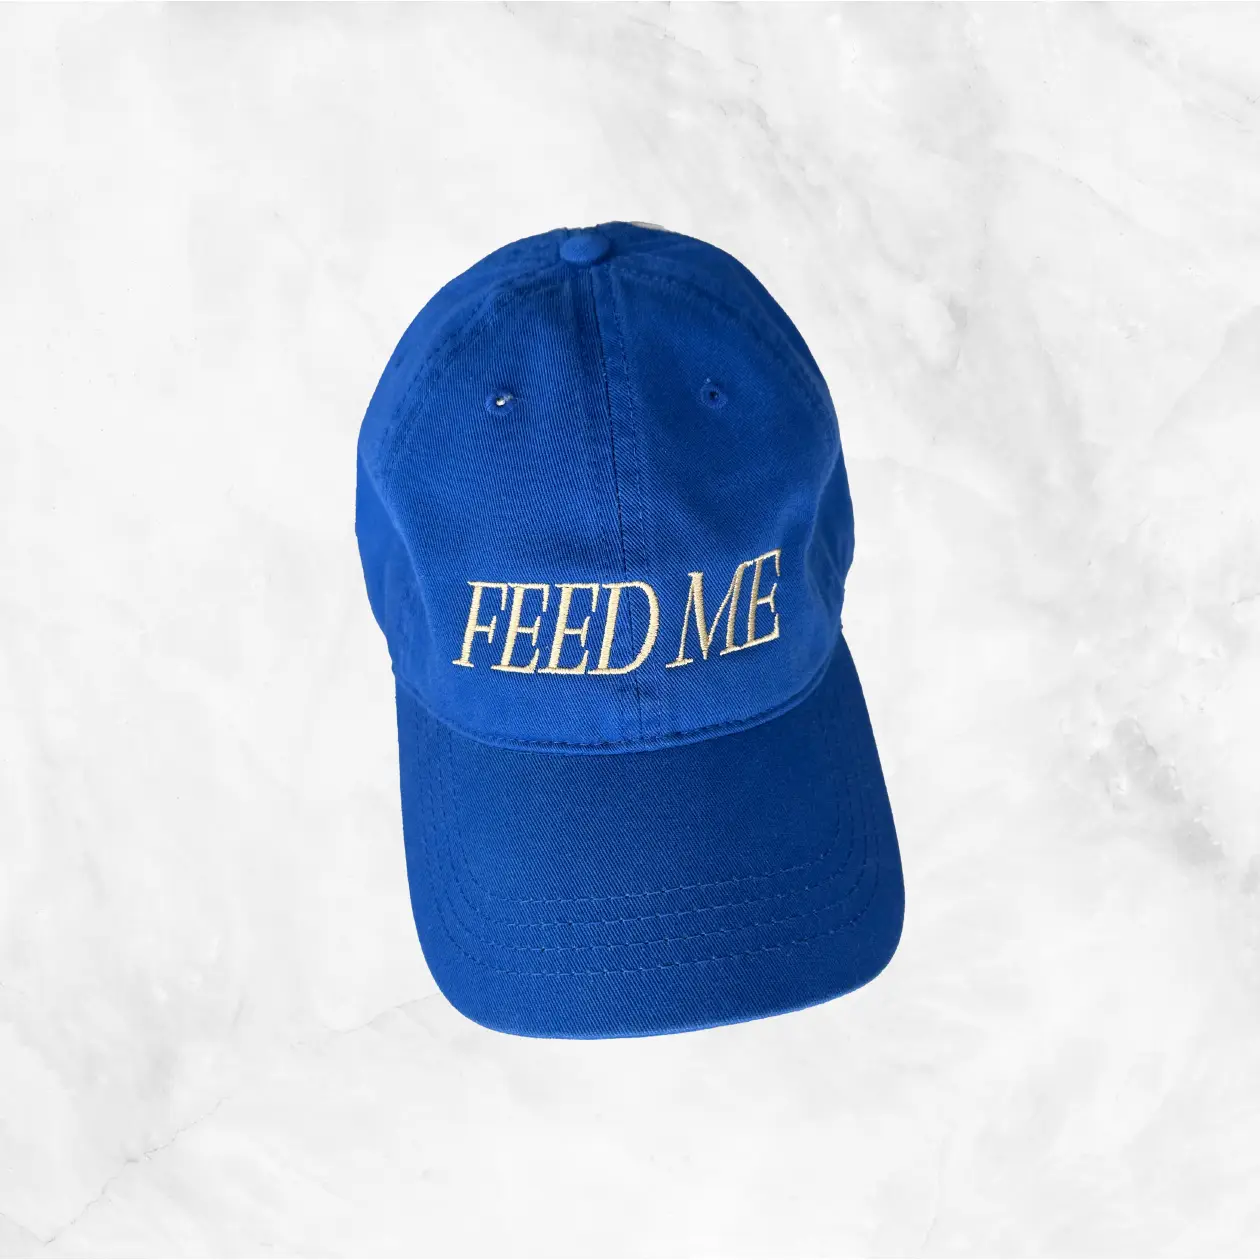 Feed Blue Cap